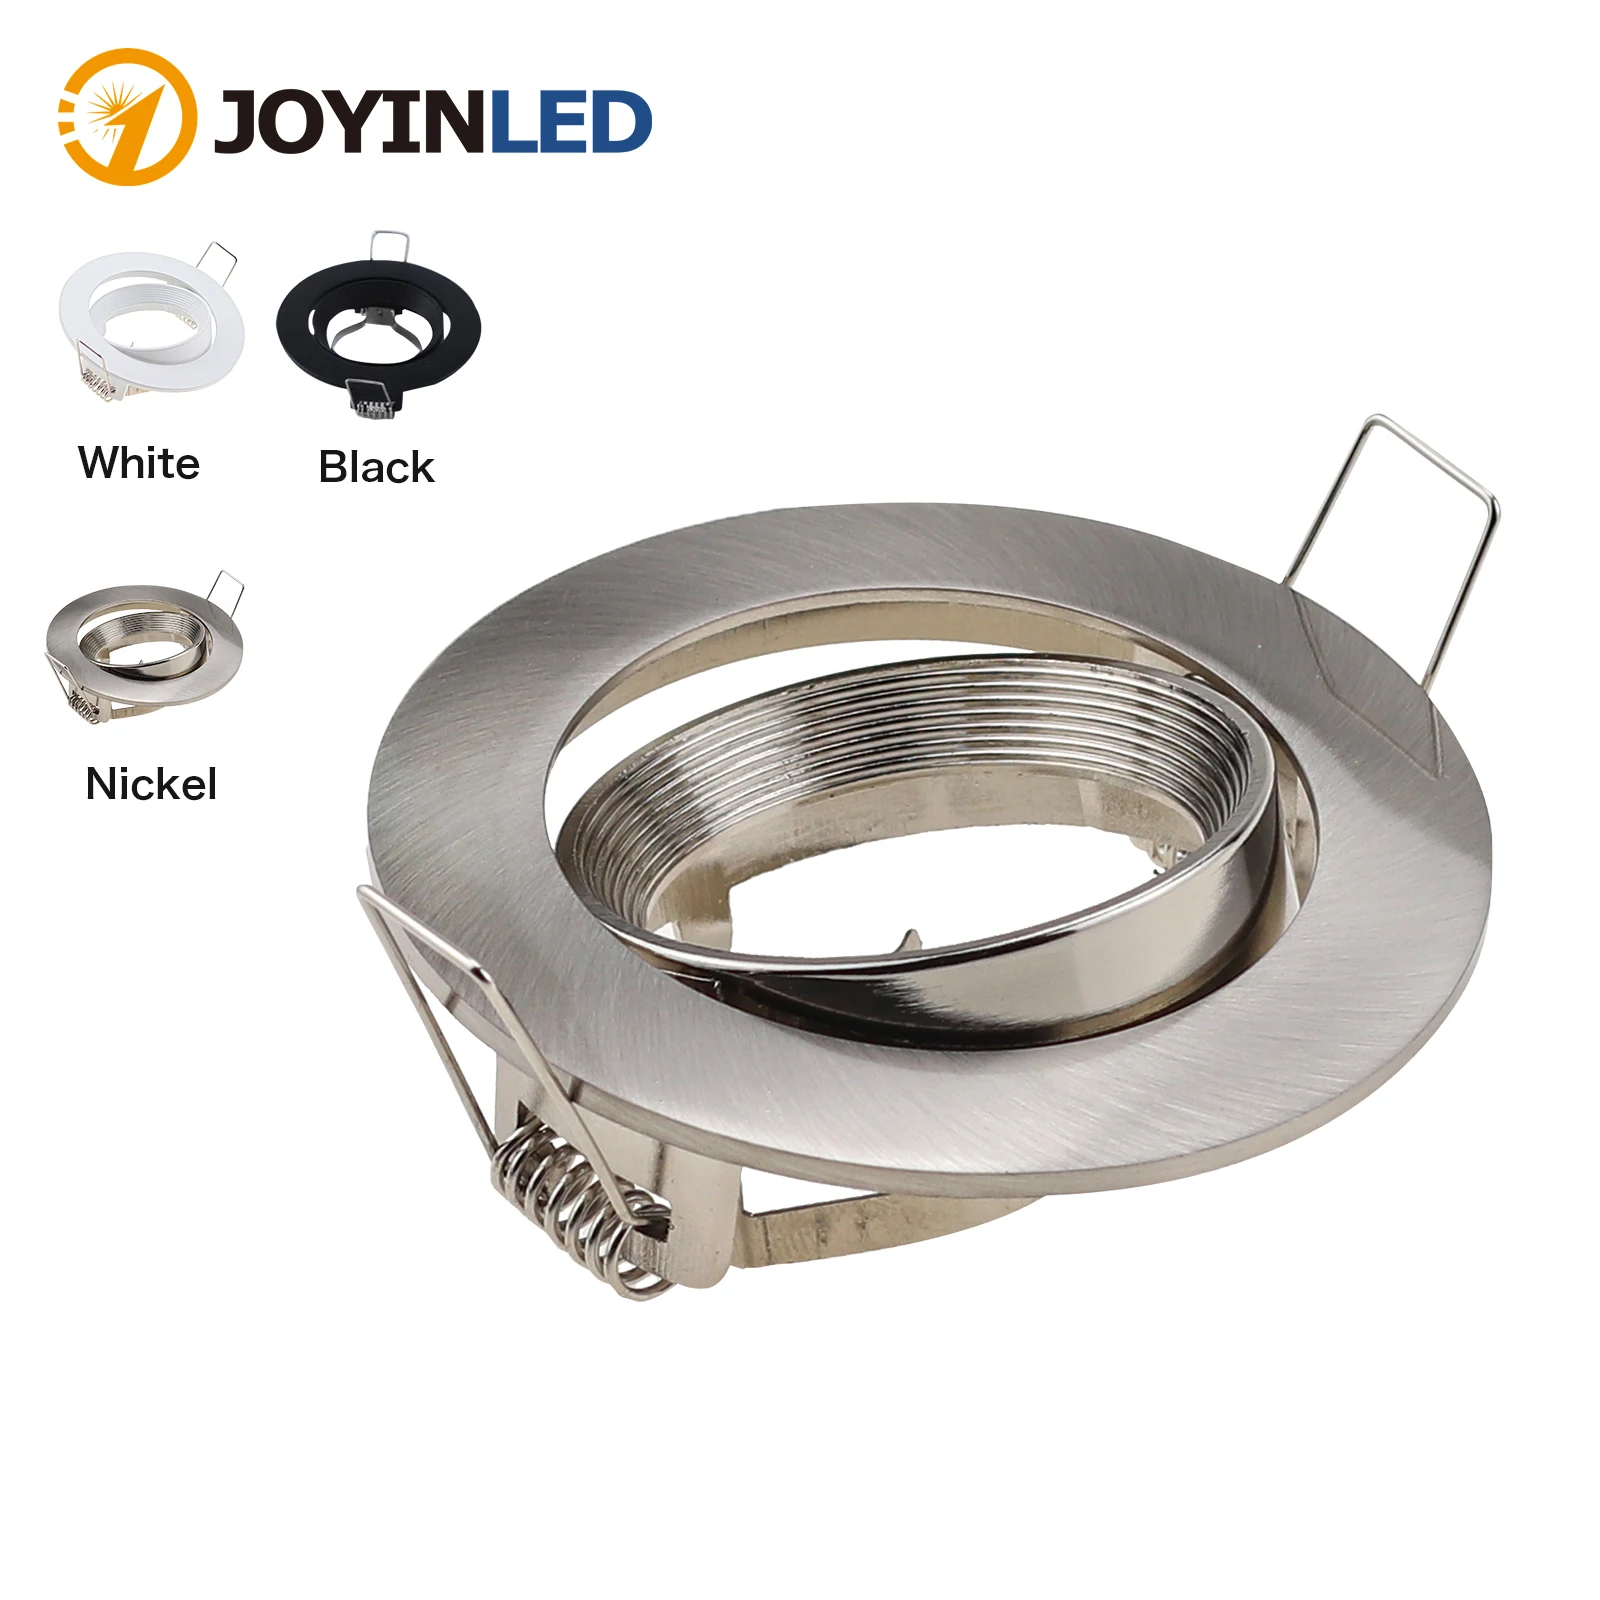 Zine alloy GU10/ MR16 Satin Nickel LED Downlight lamp holder fixture trims бра mantra loop satin nickel 1816